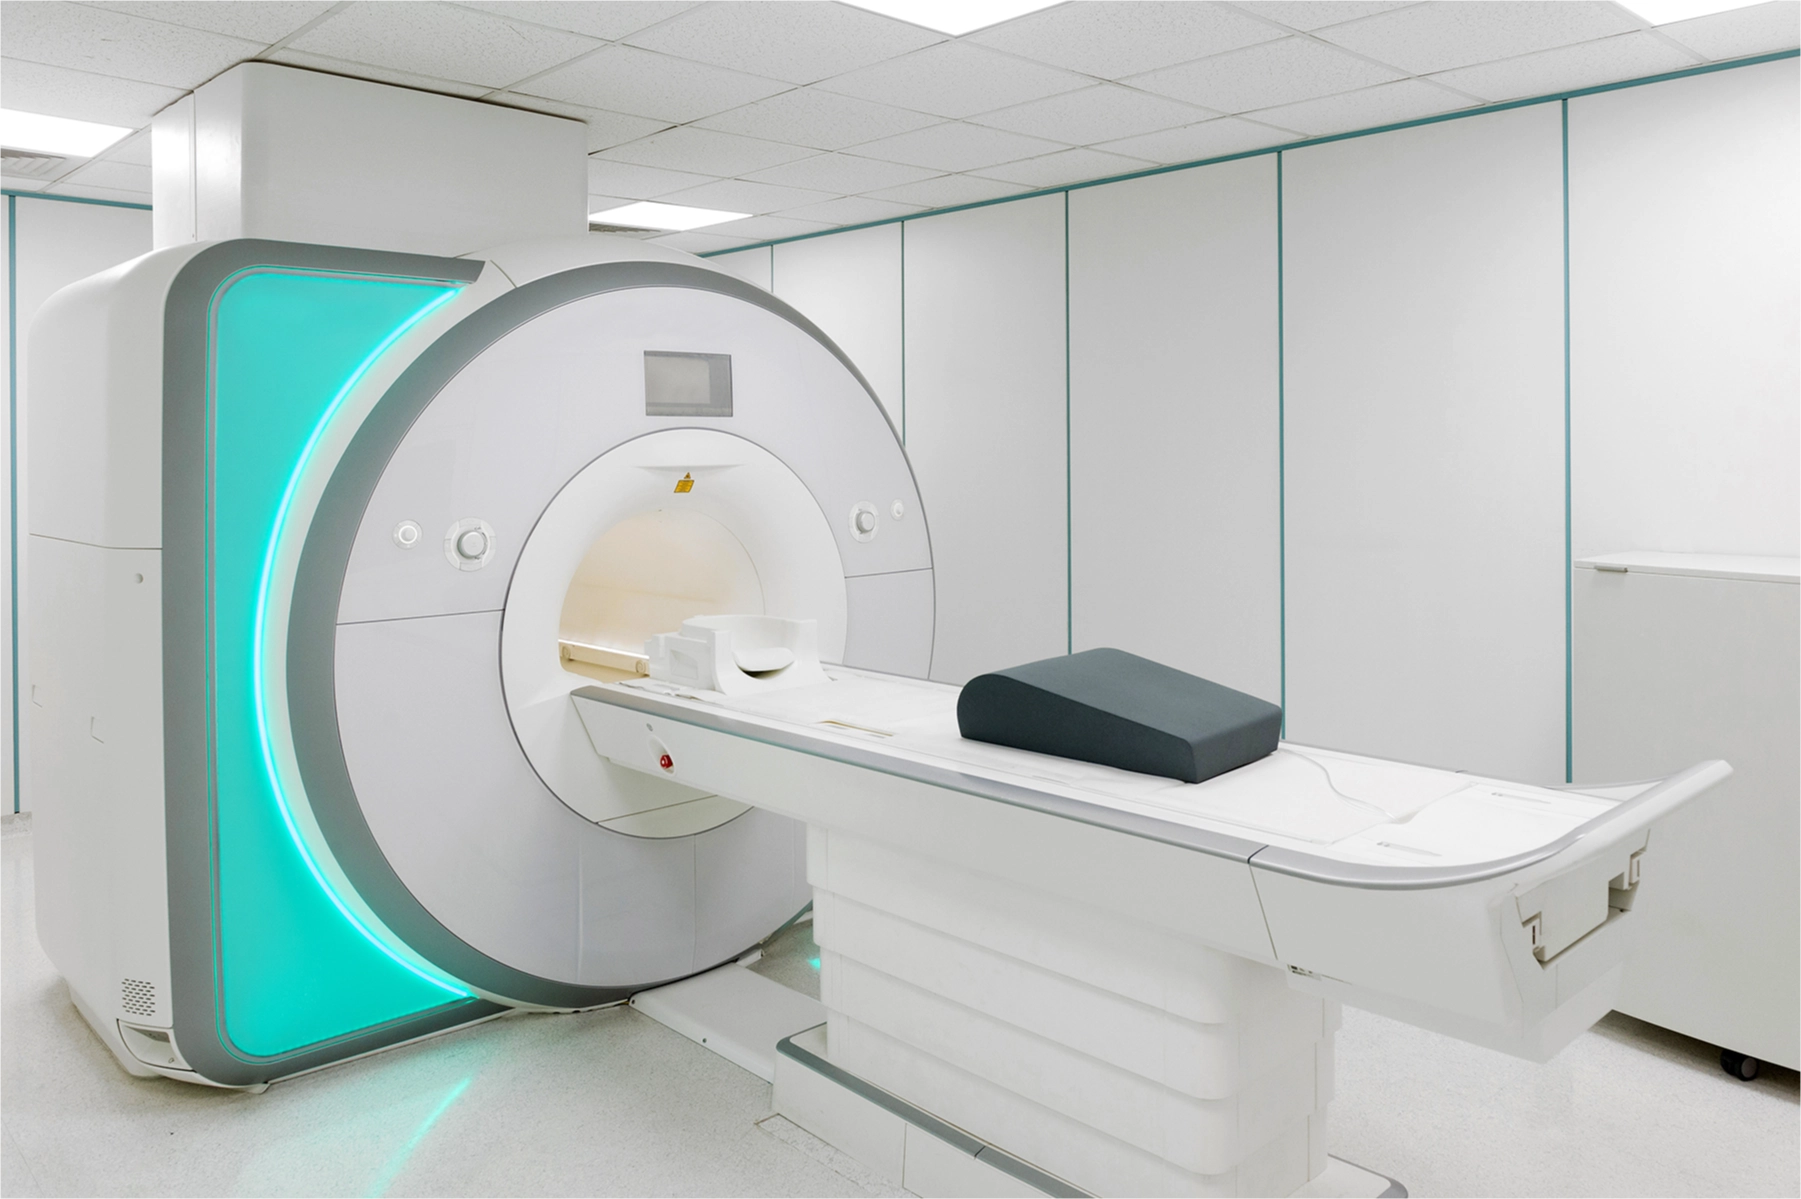 Siemens Skyra 3 tesla MRI System